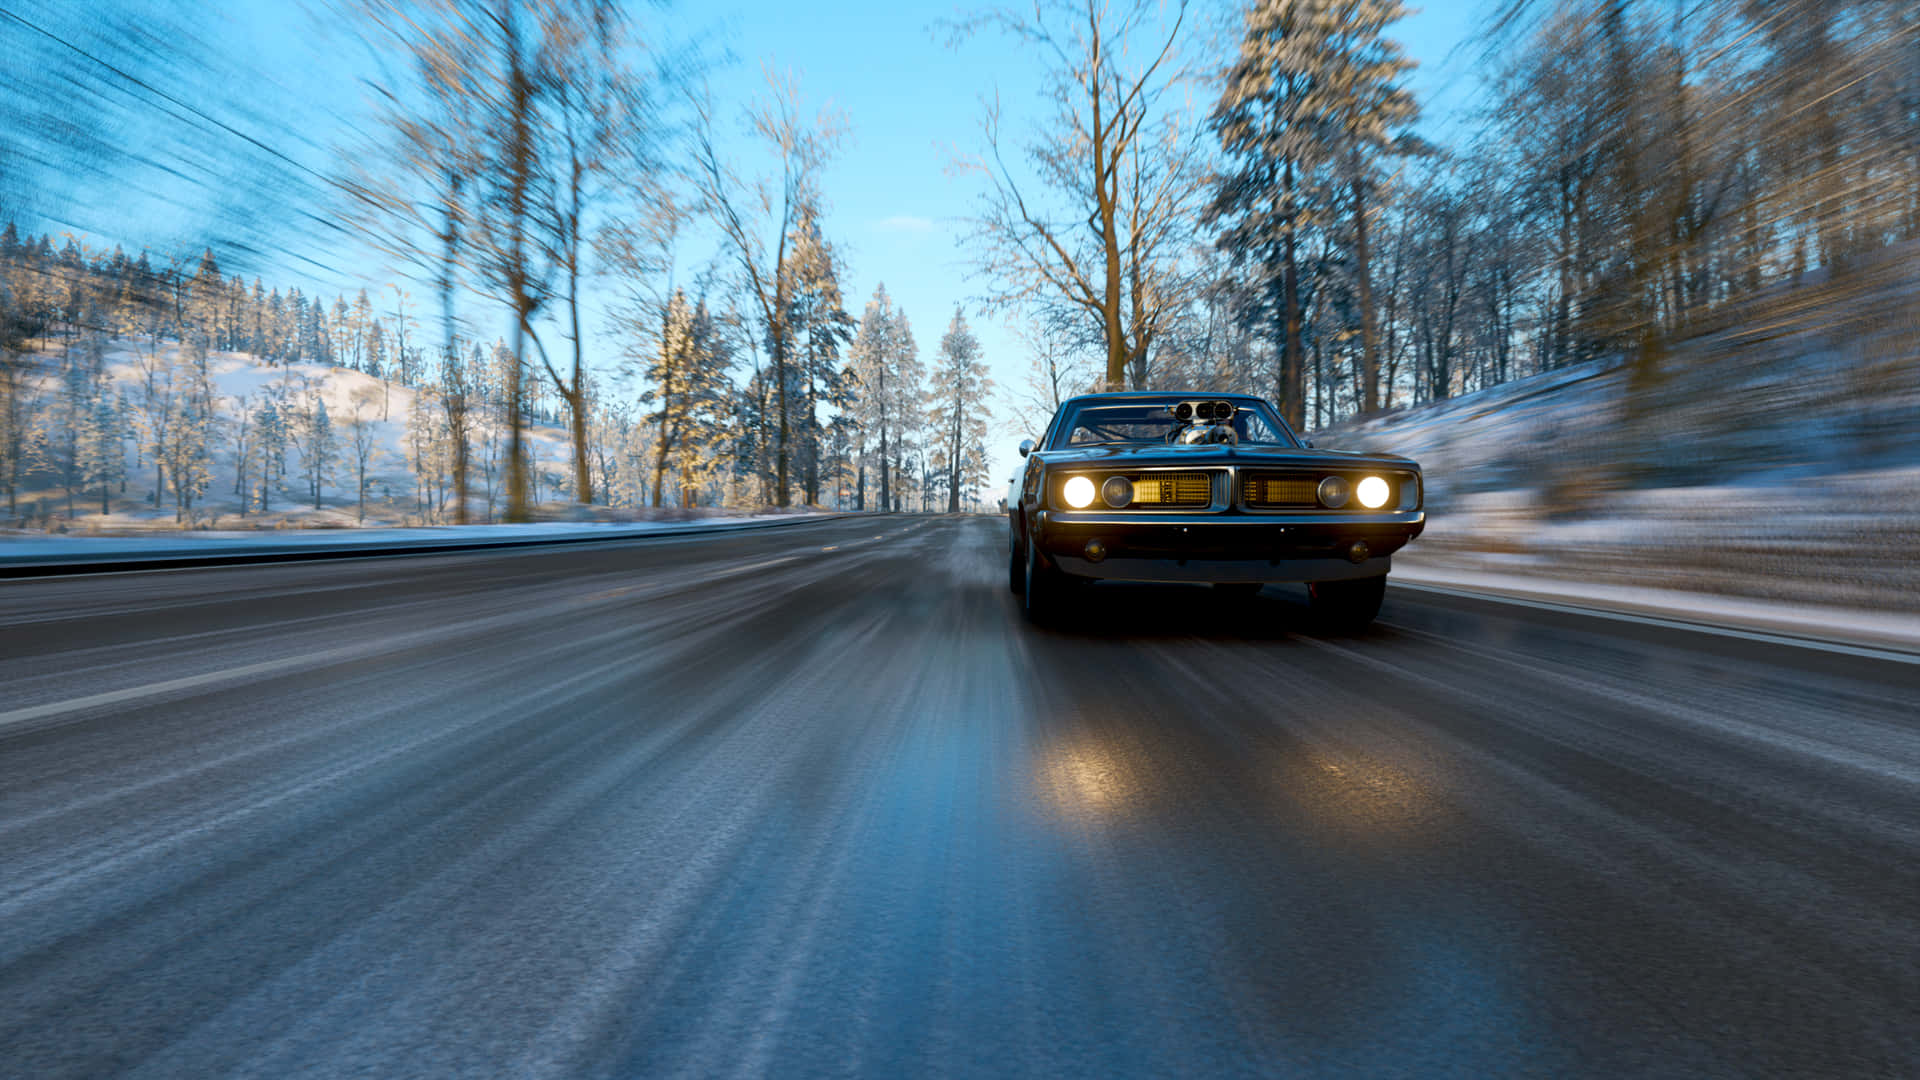 A Car Driving Down A Snowy Road Wallpaper